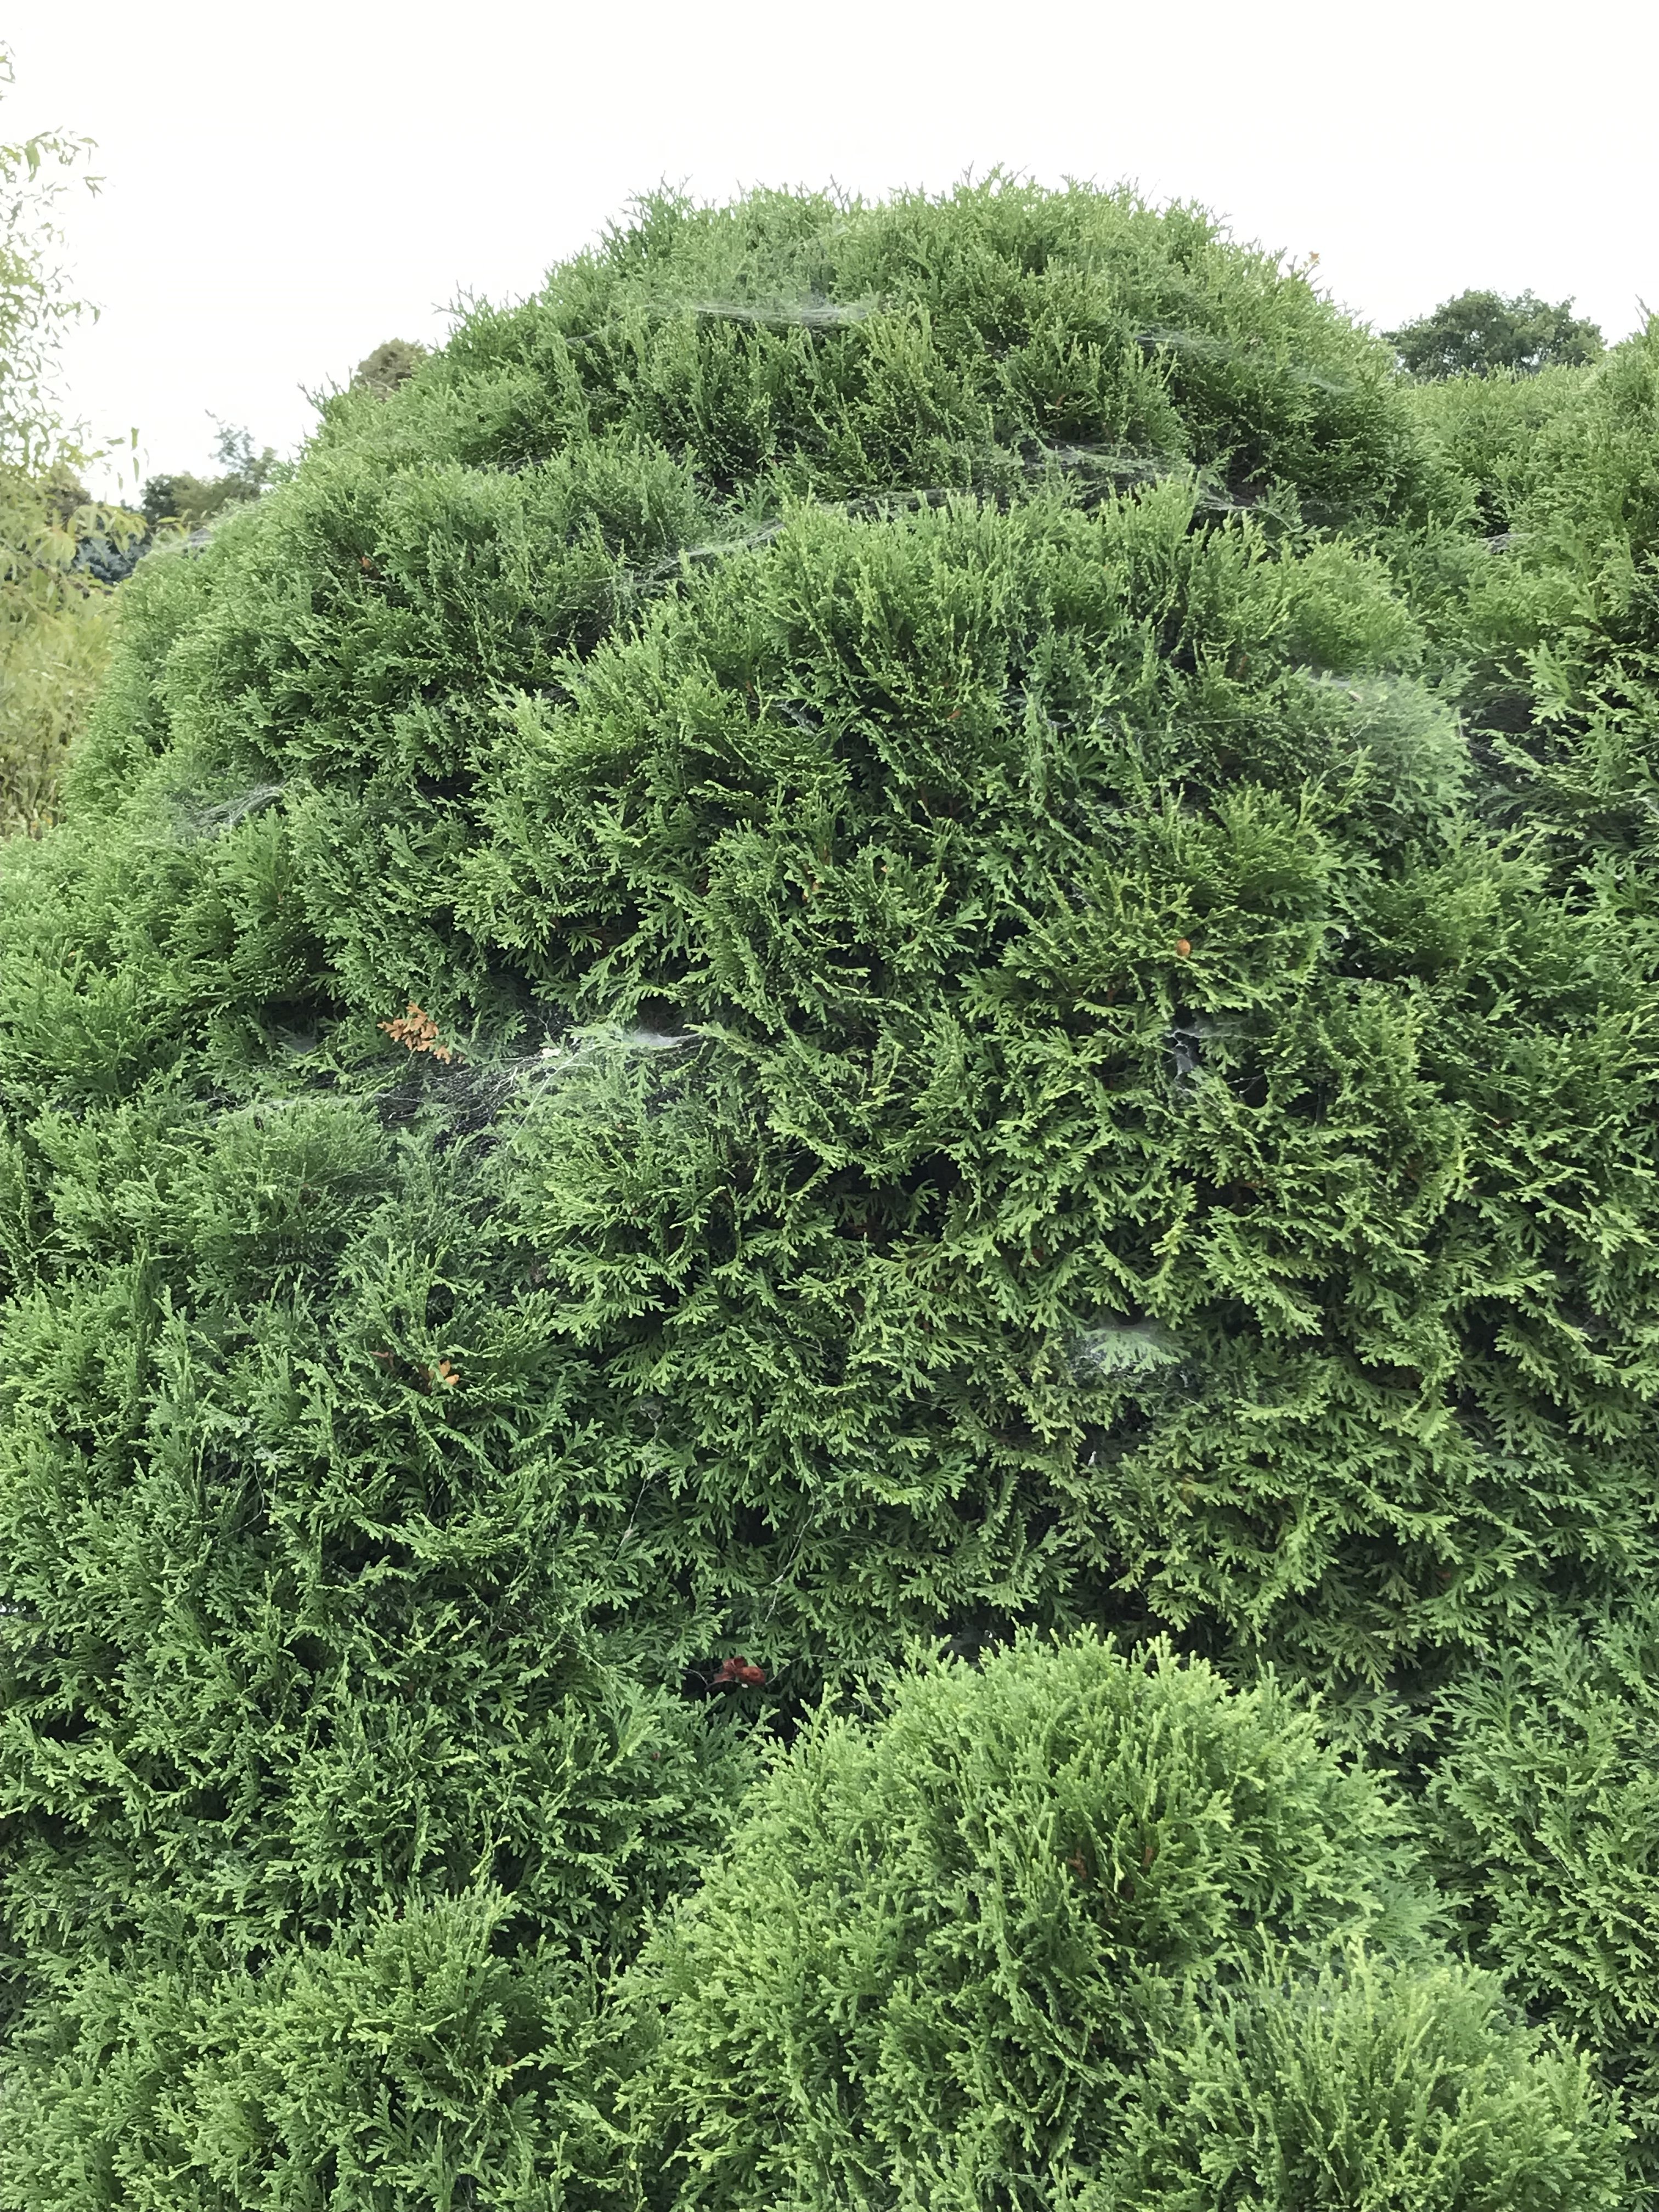 Grass spider colony